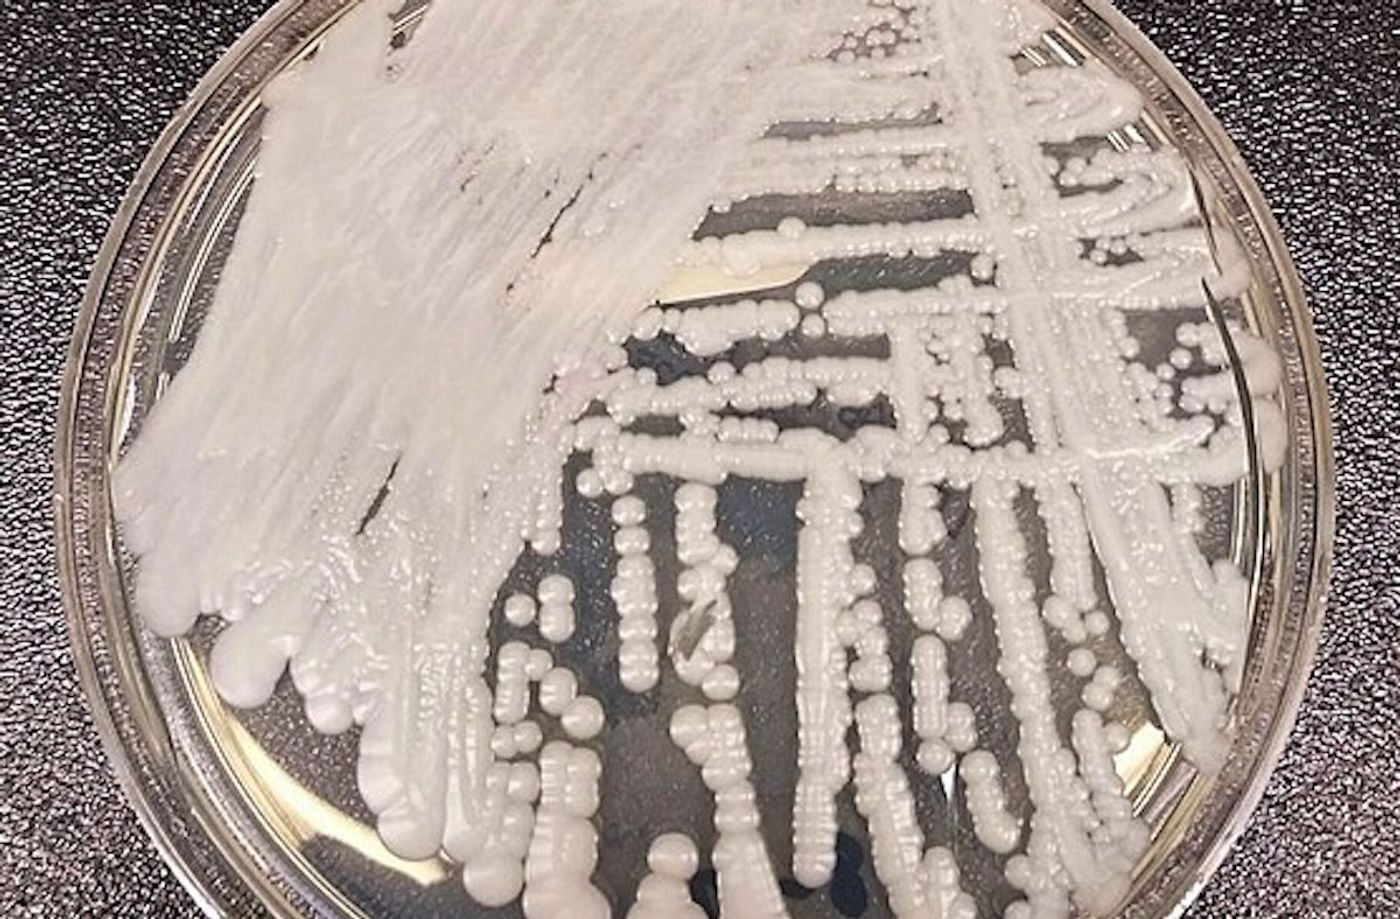 A strain of Candida auris cultured in a petri dish at a CDC laboratory. / Credit: CDC